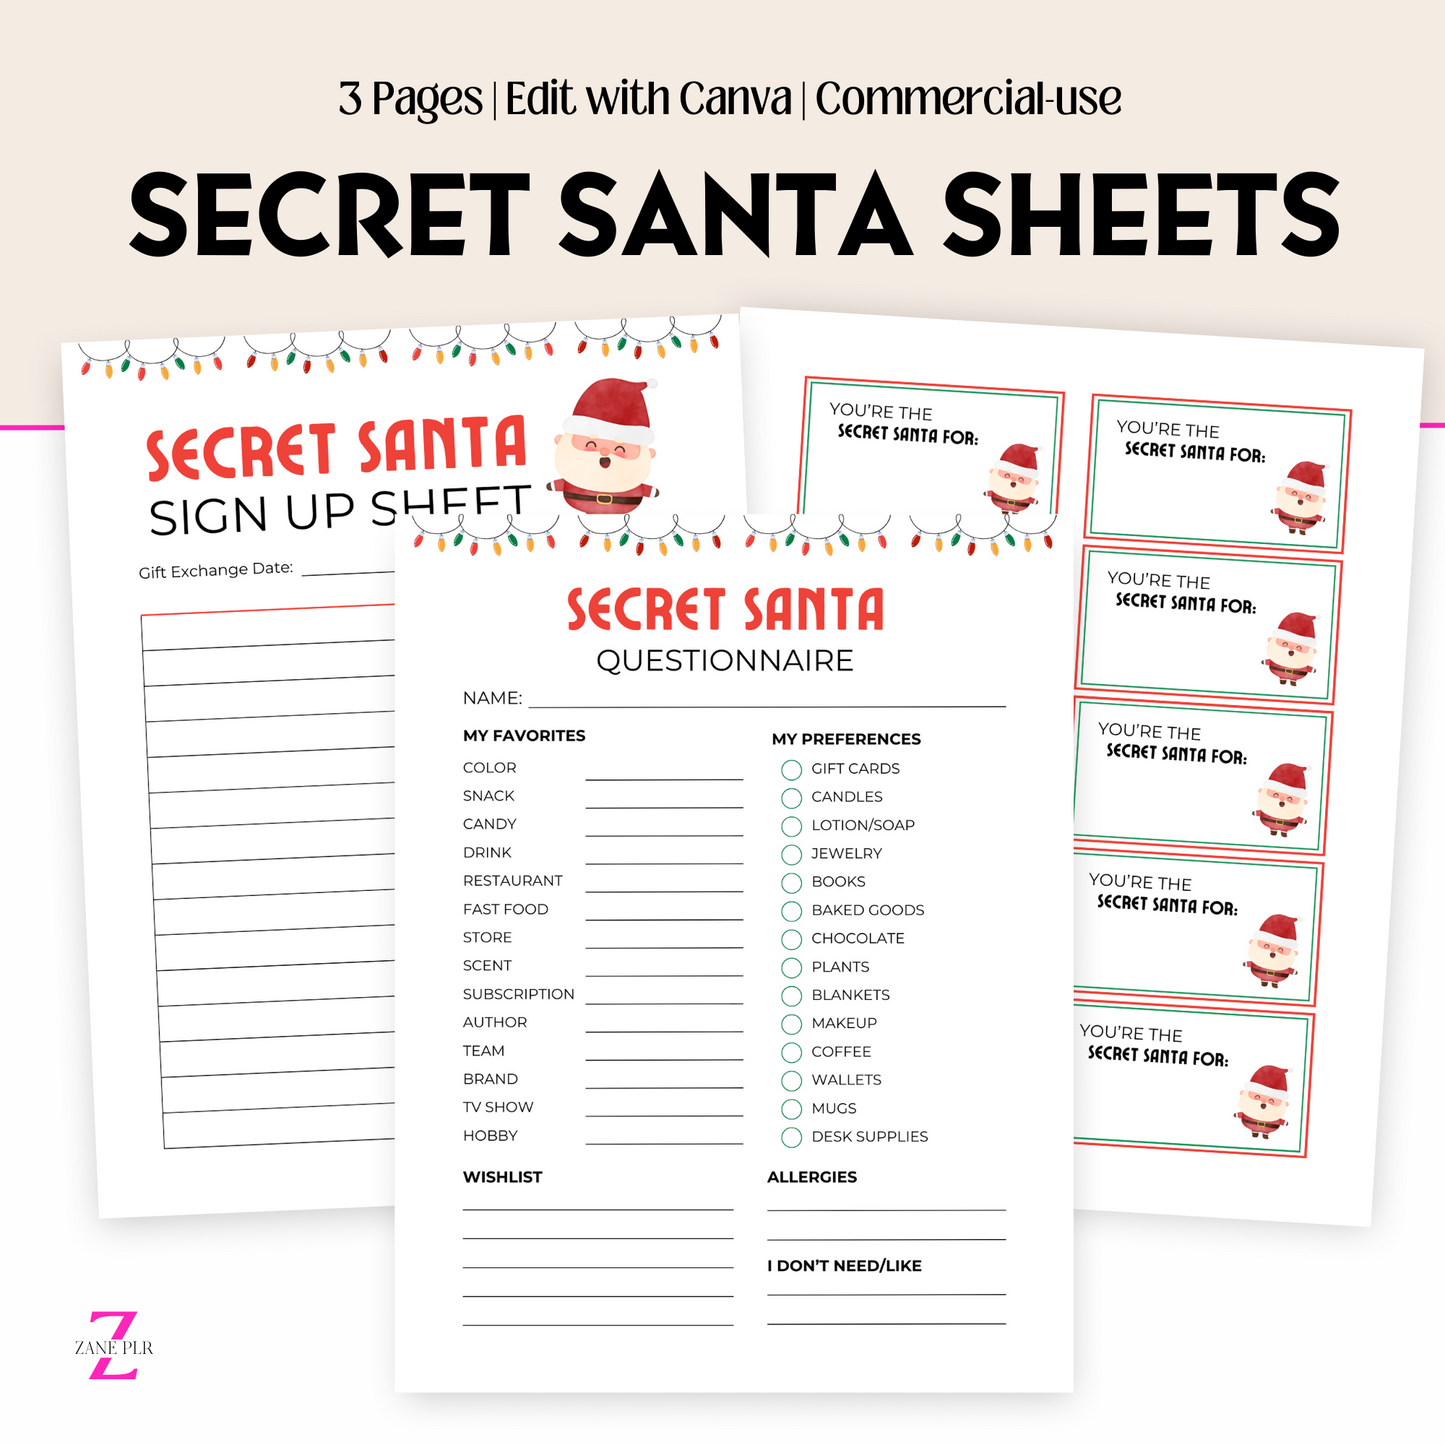 PLR Secret Santa Sheets